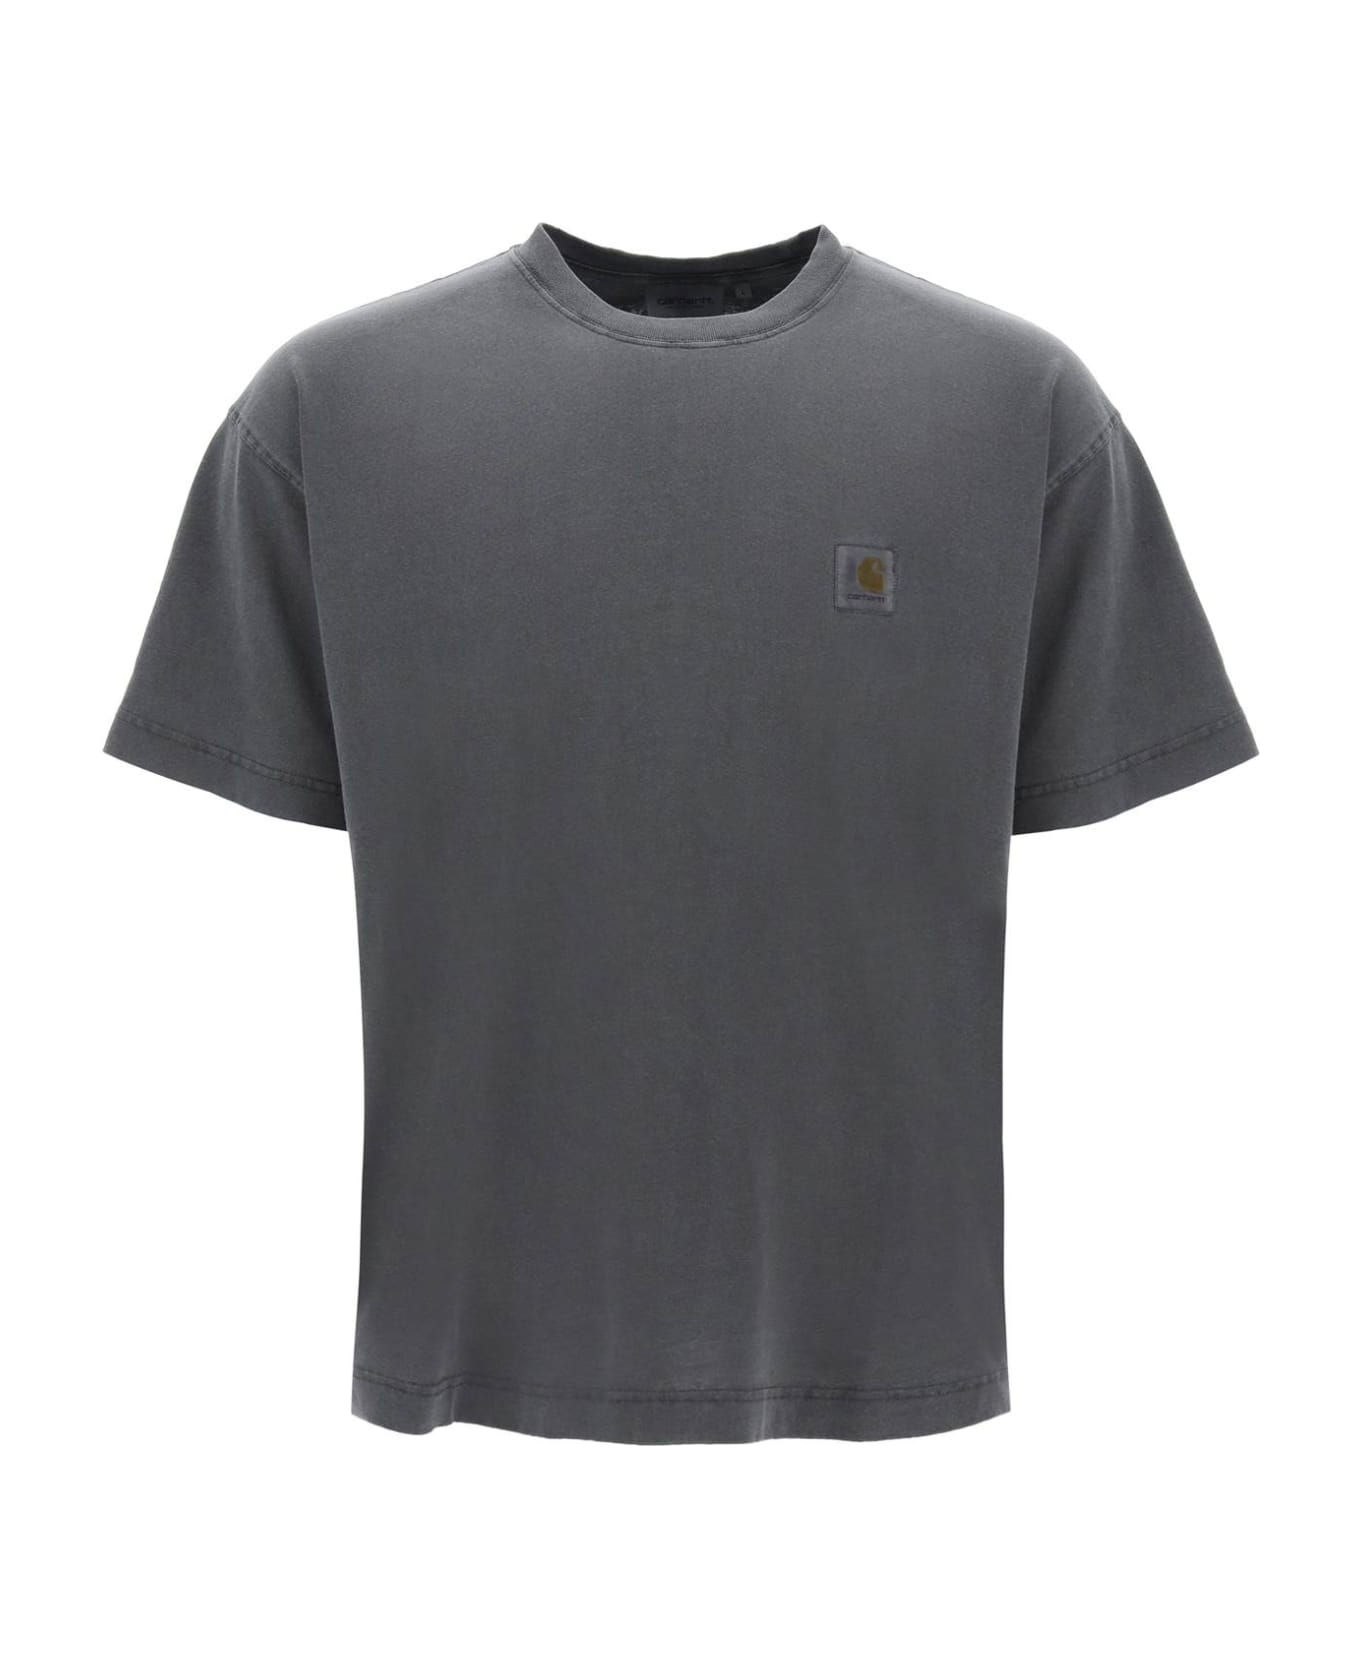 Carhartt Dark Grey Cotton Oversize S/s Nelson T-shirt - CHARCOAL